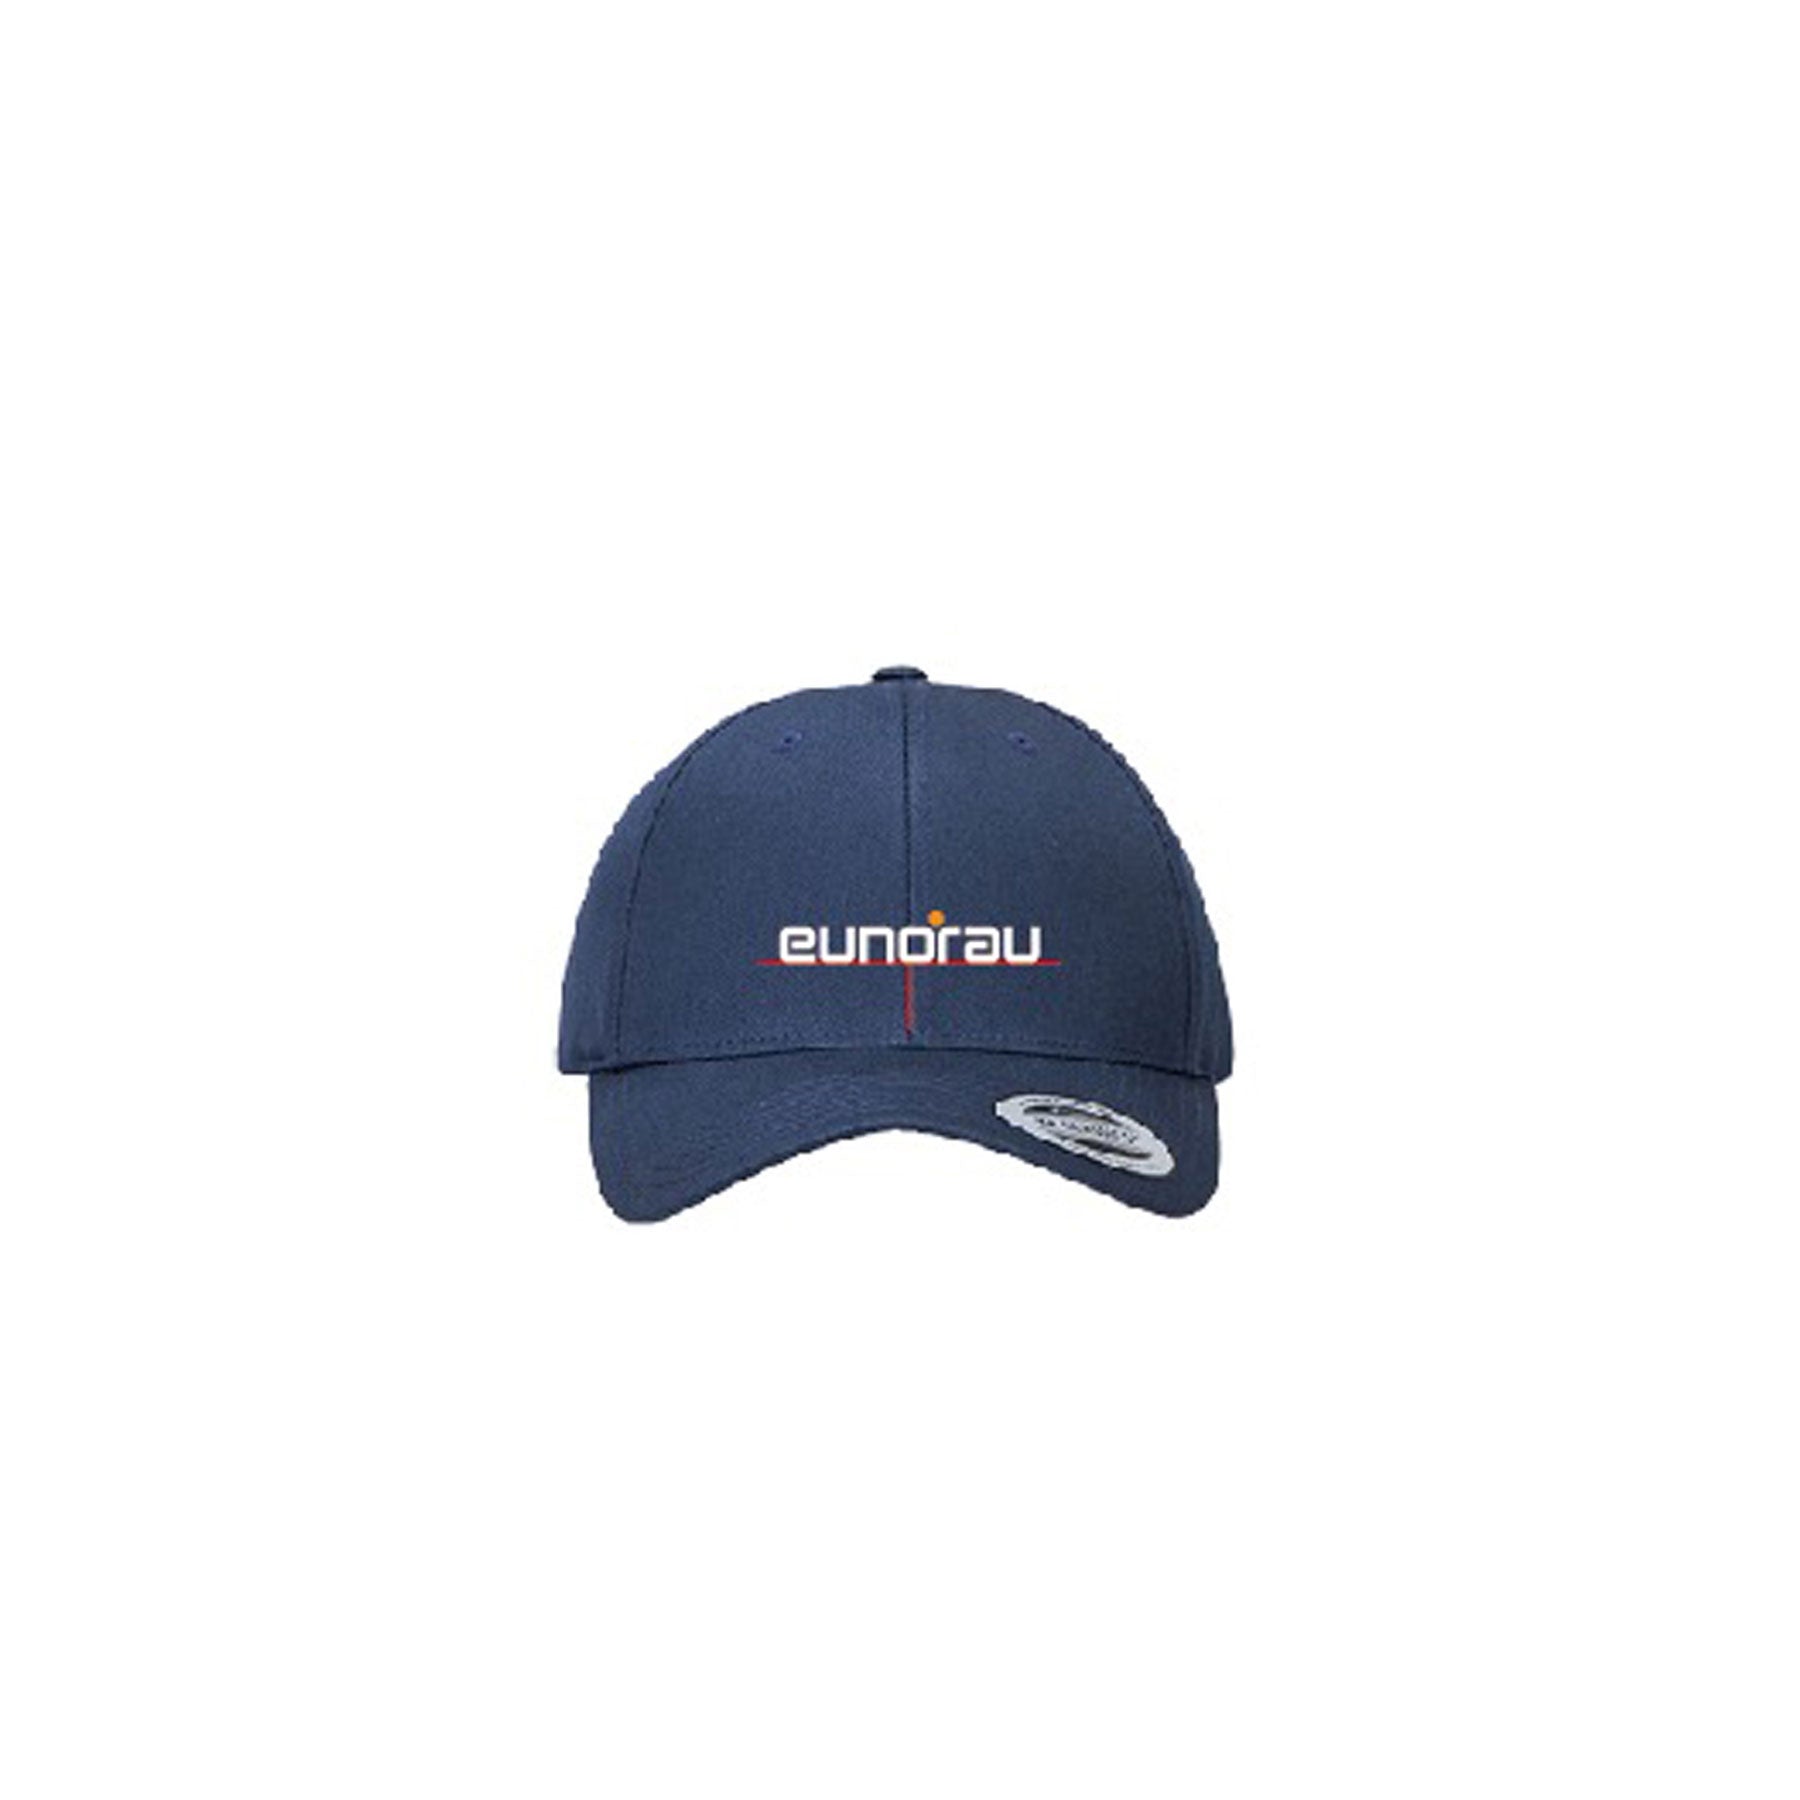 Eunorau logo Hat